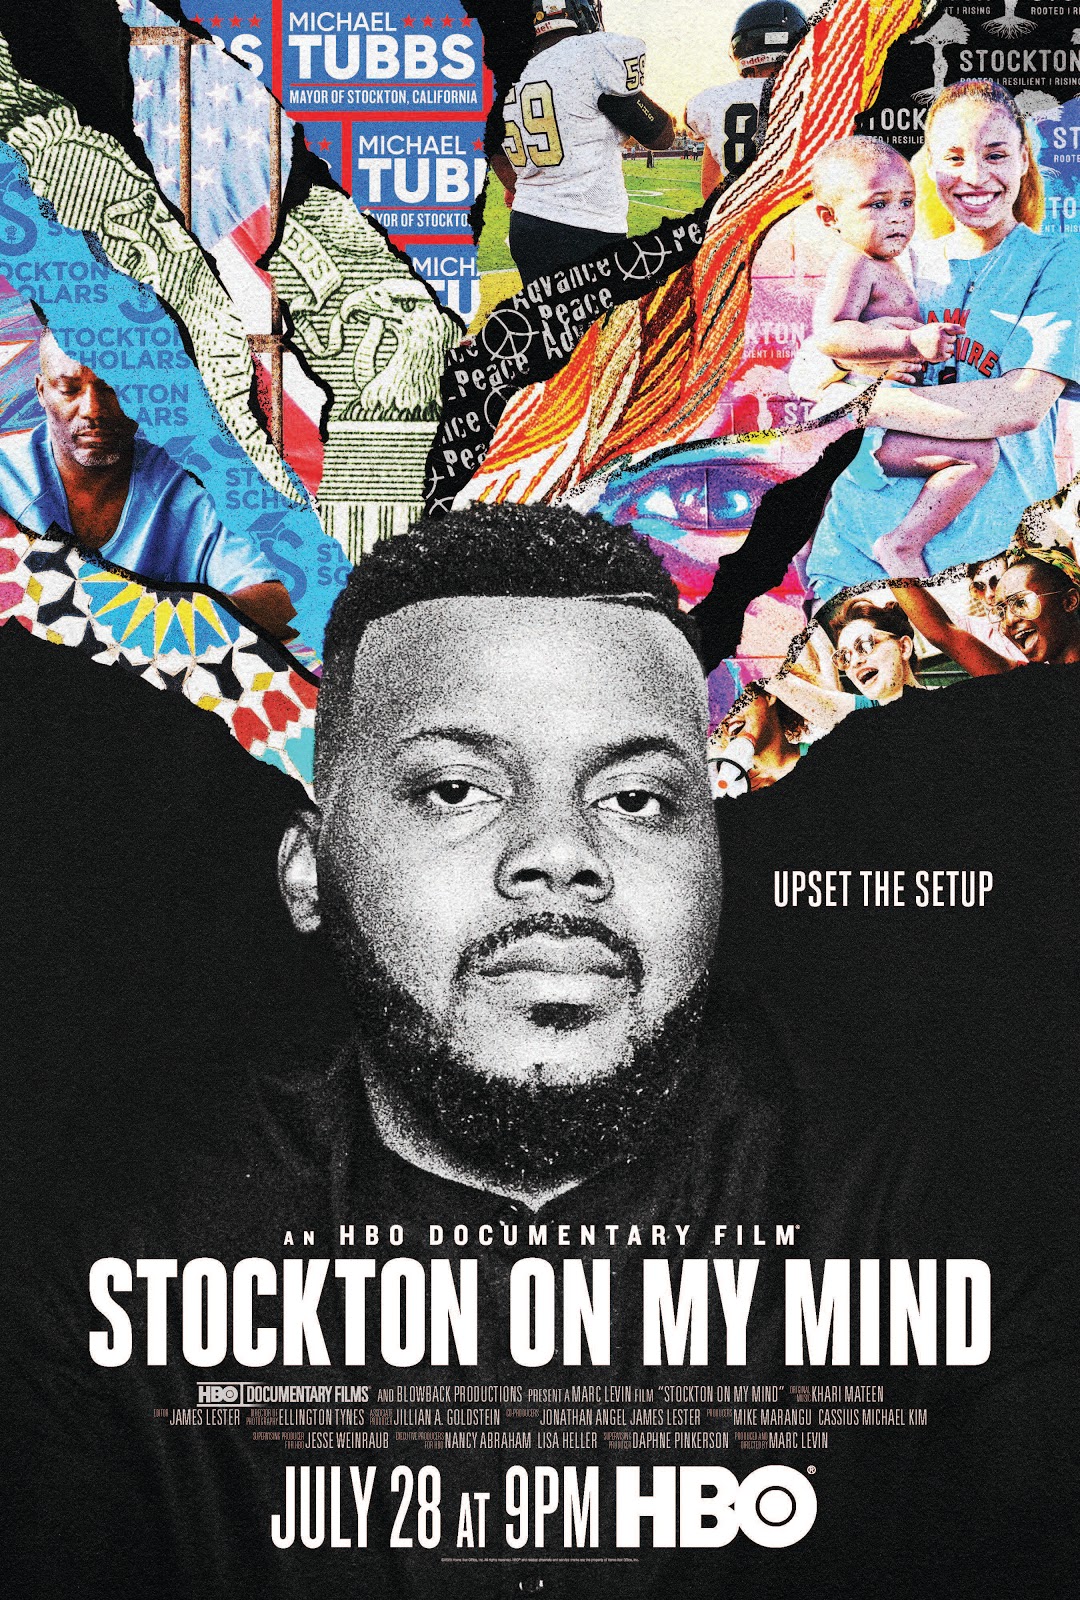 Nonton film Stockton on My Mind layarkaca21 indoxx1 ganool online streaming terbaru